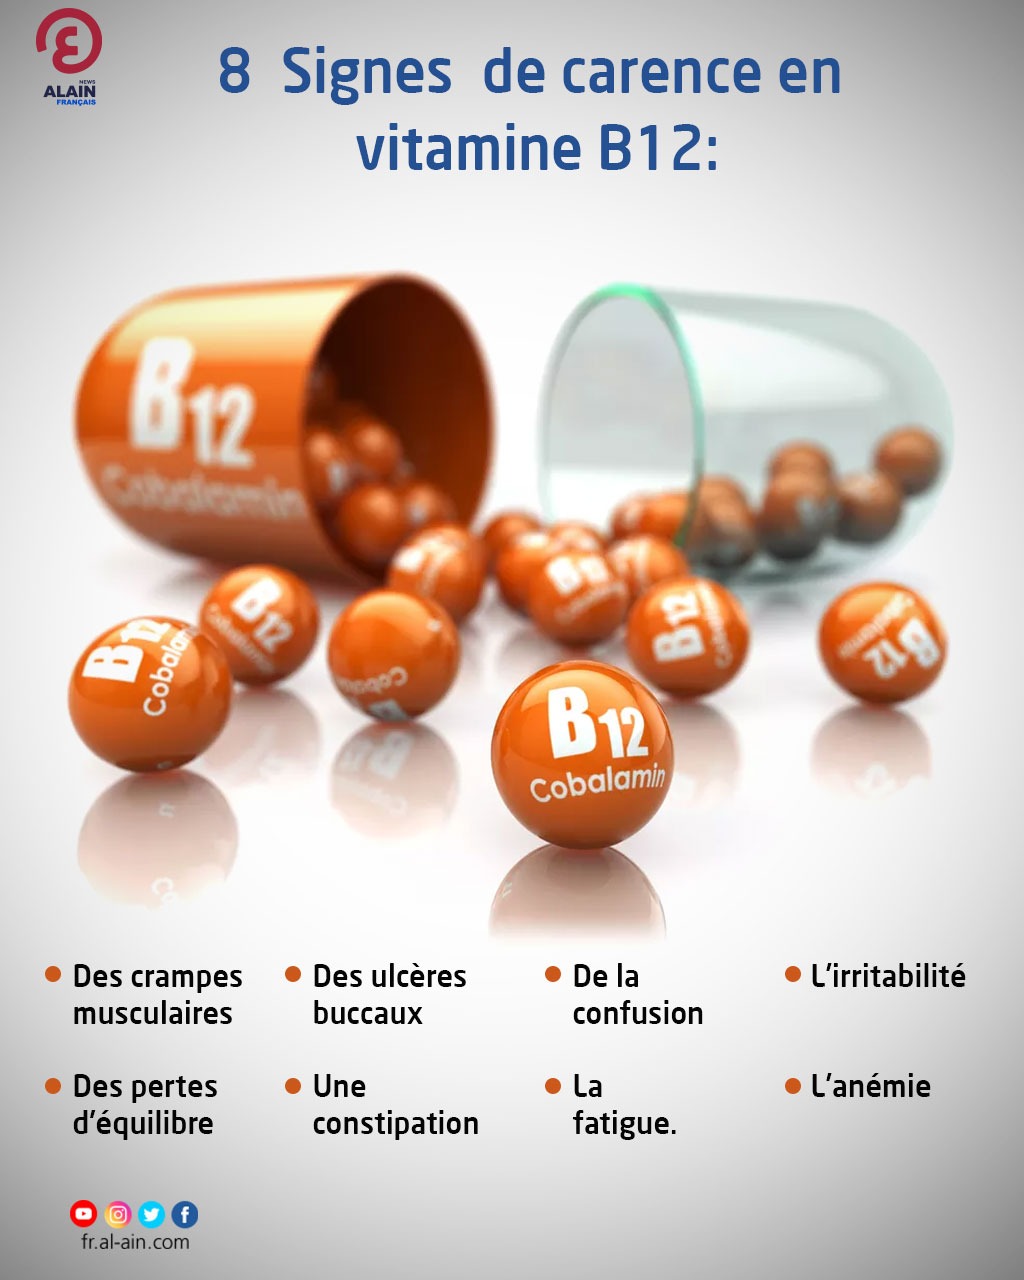 kosten Bachelor opleiding stout 8 signes de carence en vitamine B12